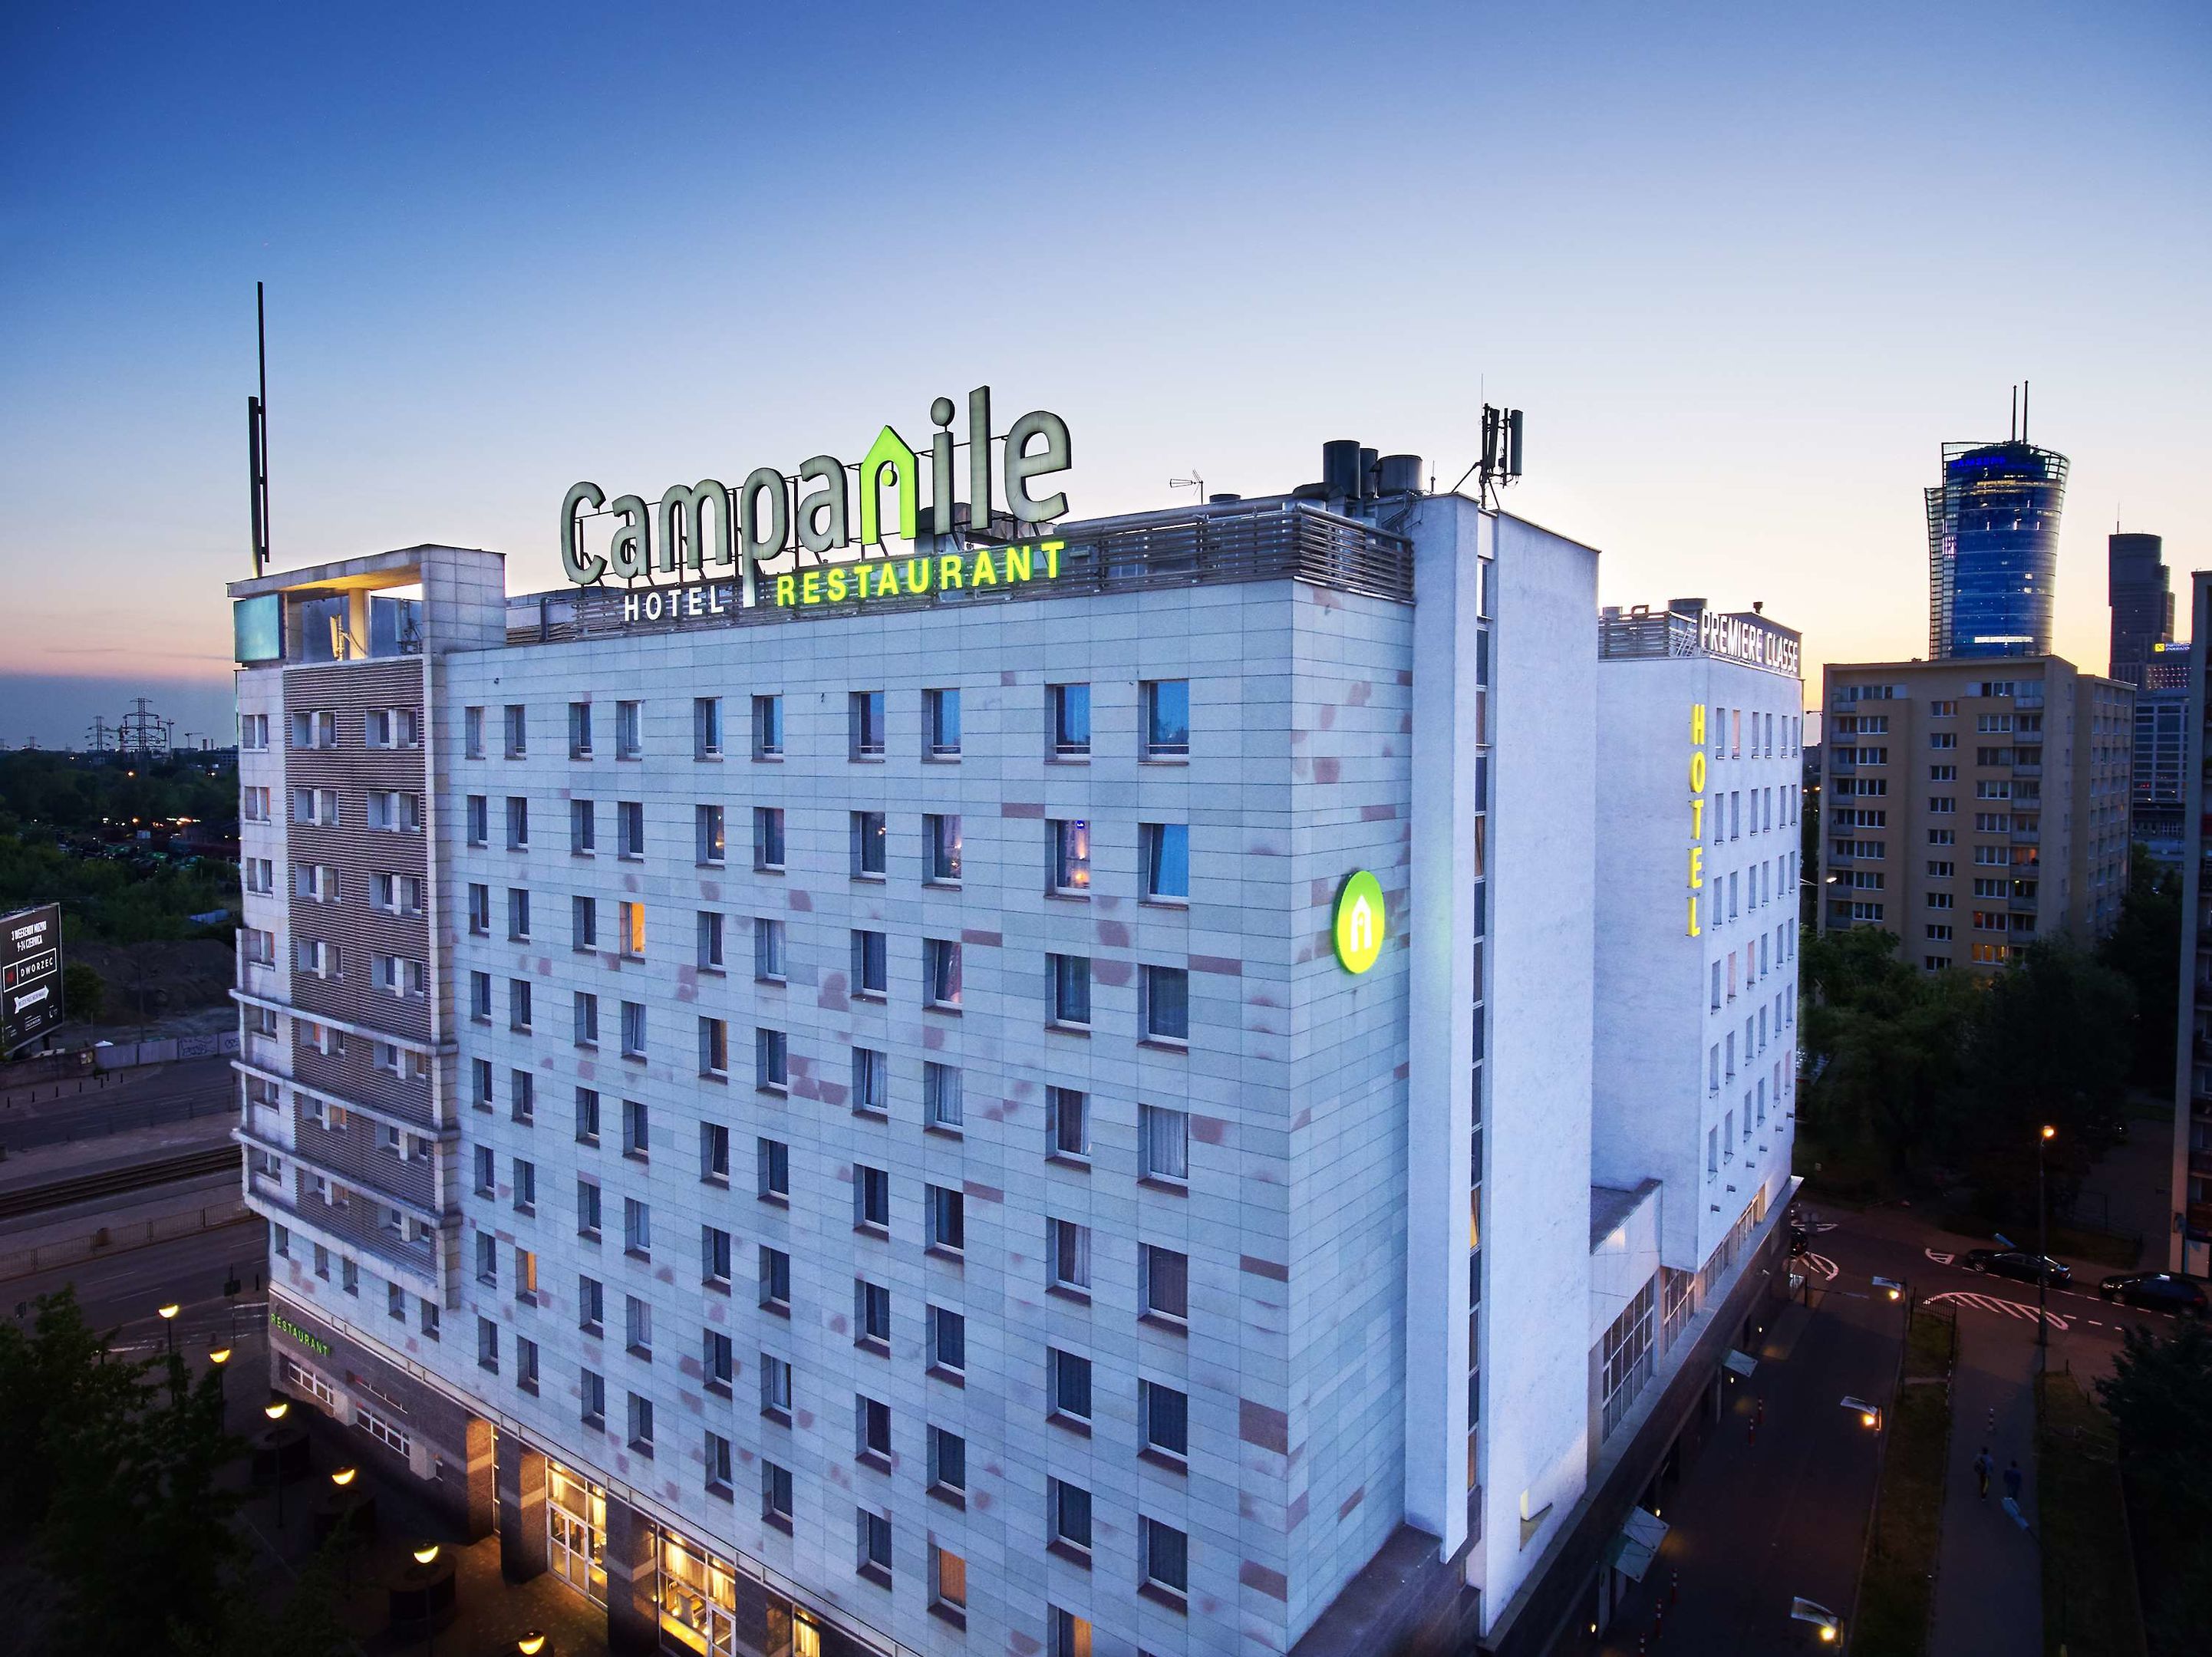 Hotel Campanile Warszawa